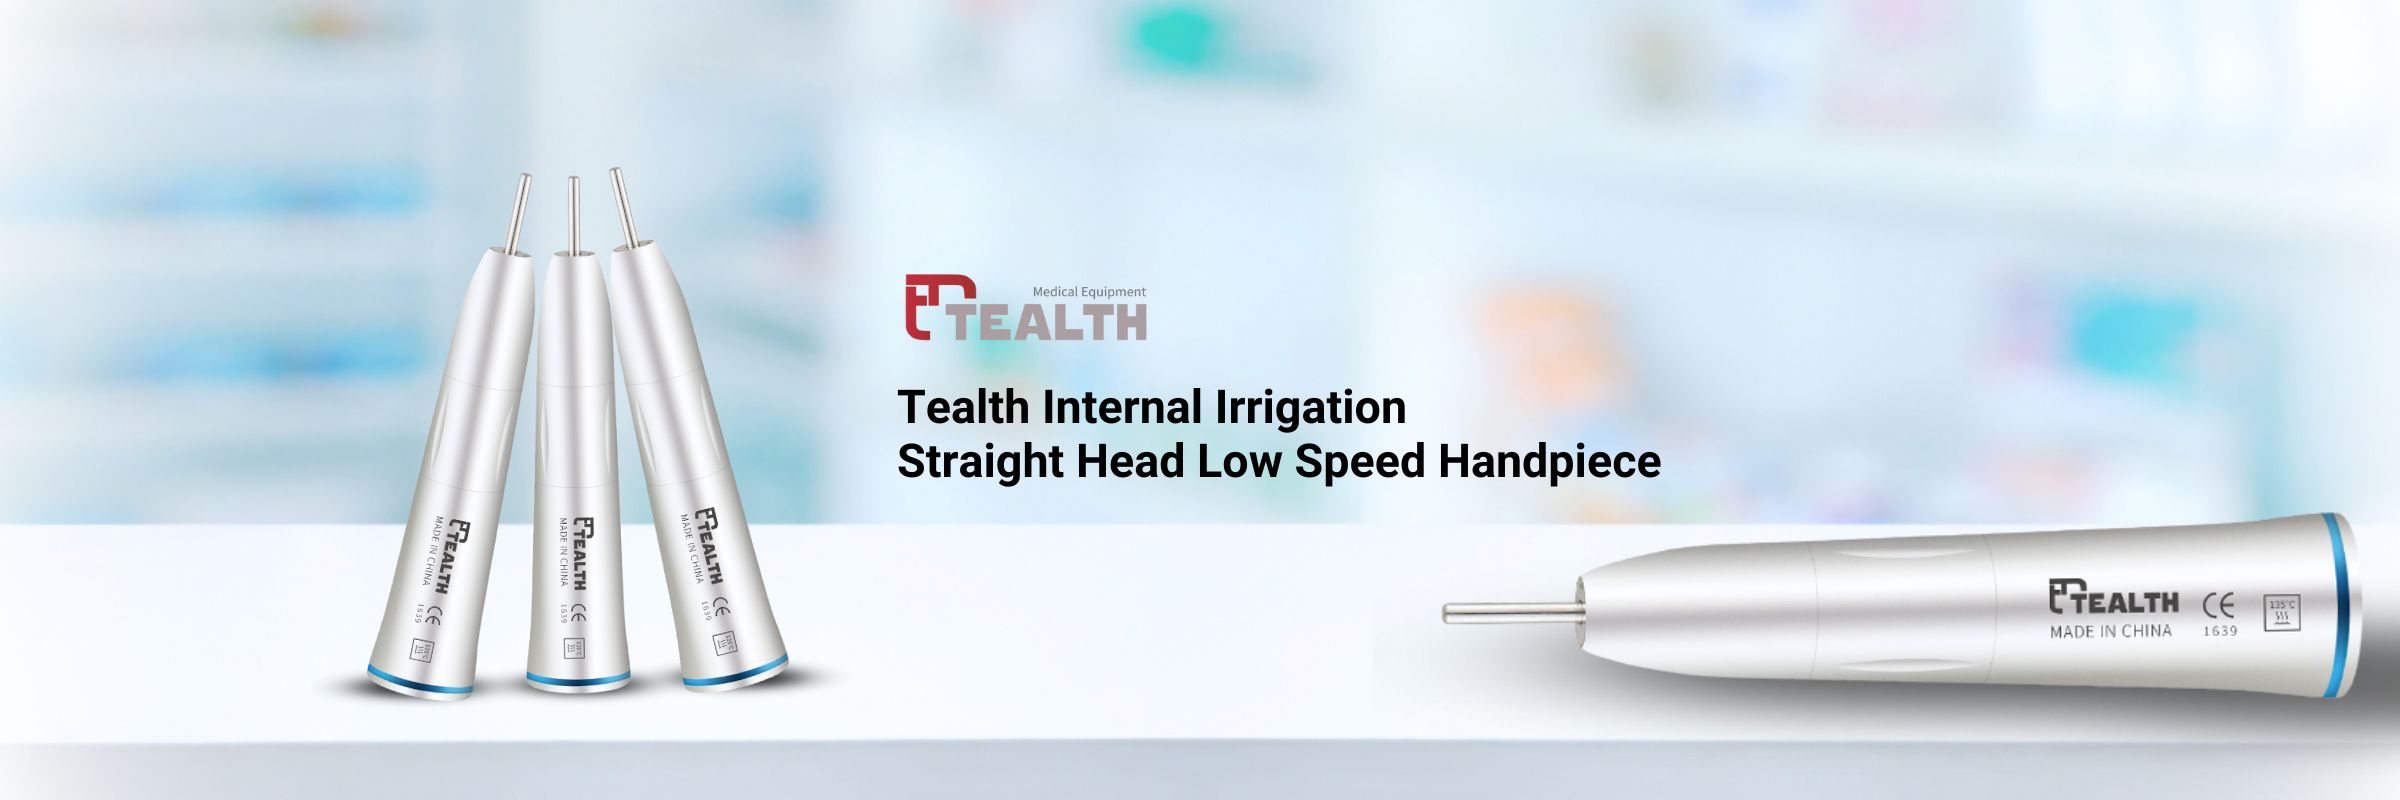 Tealth Internal Irrigation Straight Head Low Speed Handpiece